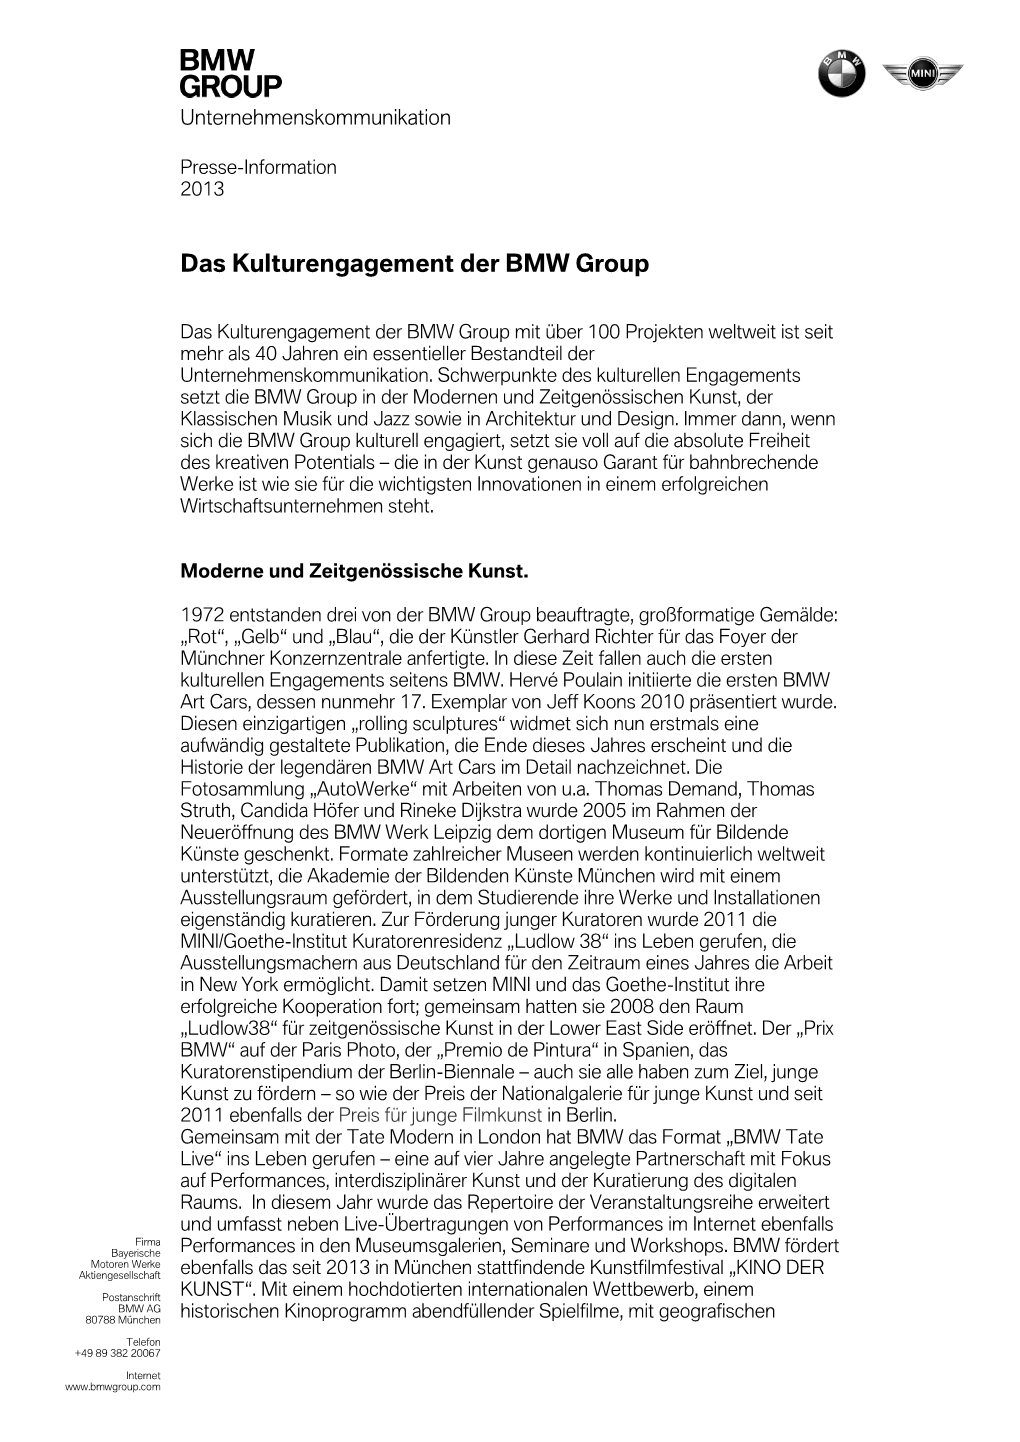 Das Kulturengagement Der BMW Group